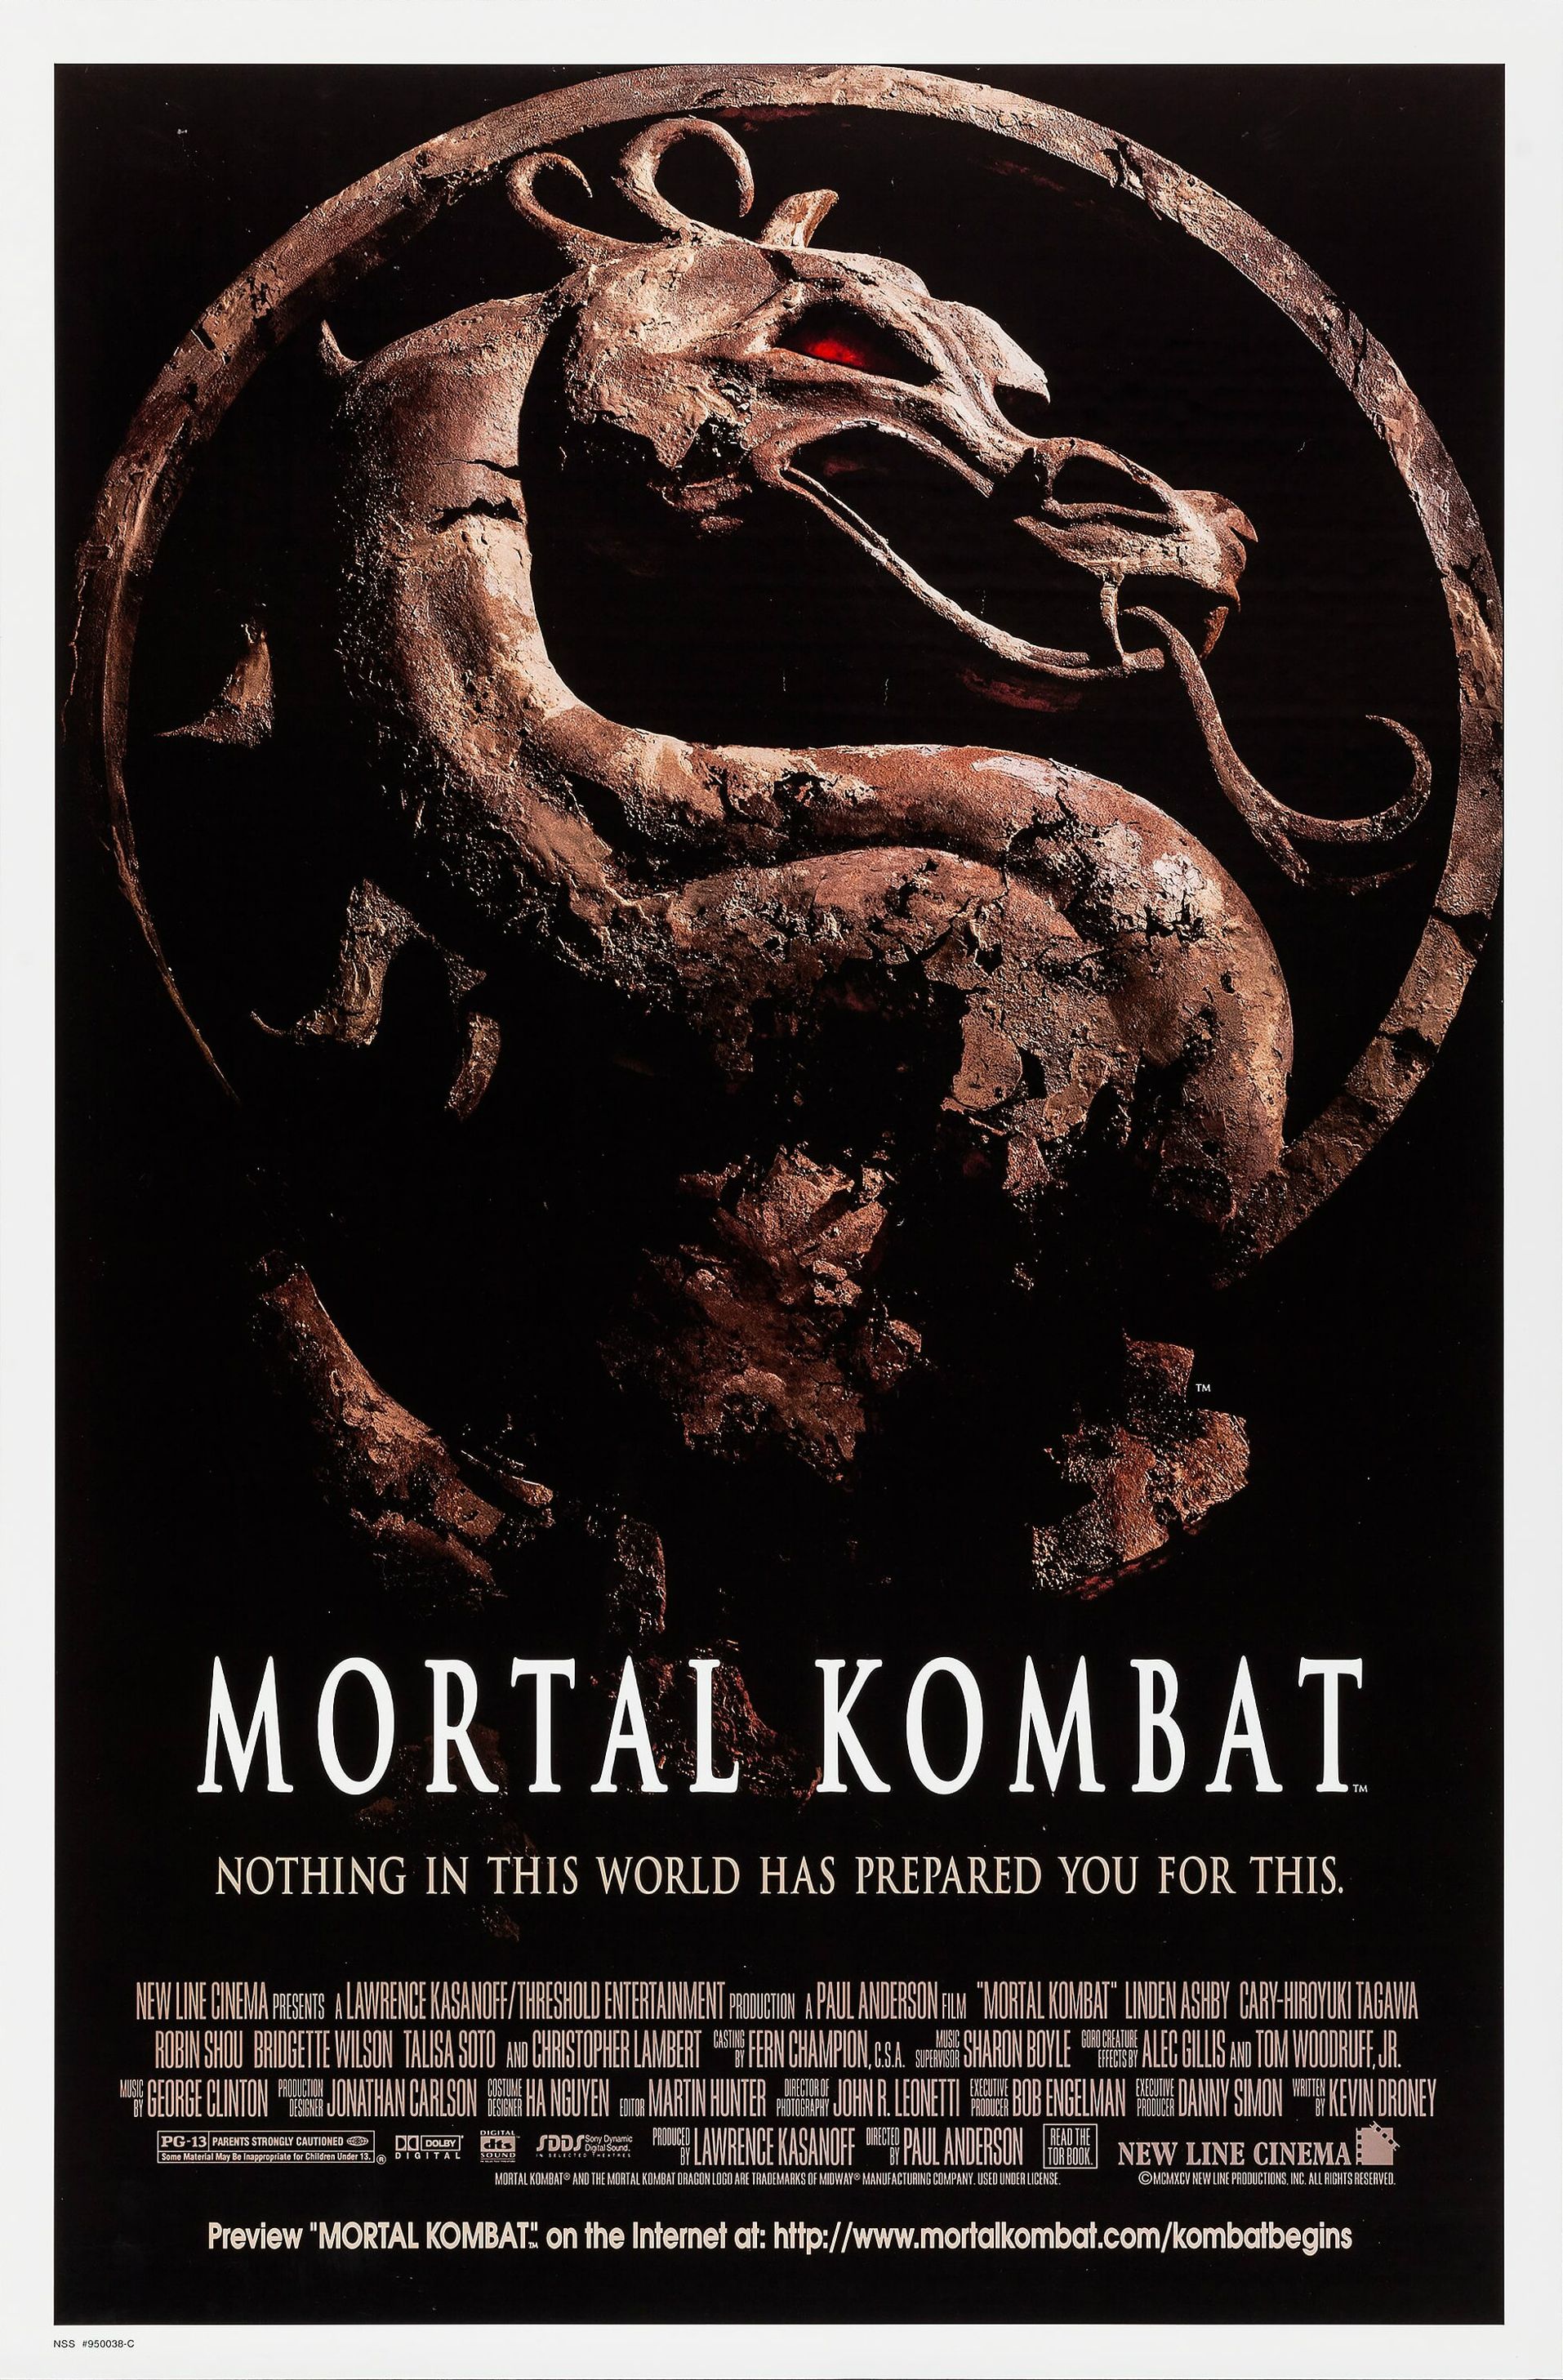 Mortal Kombat (film)